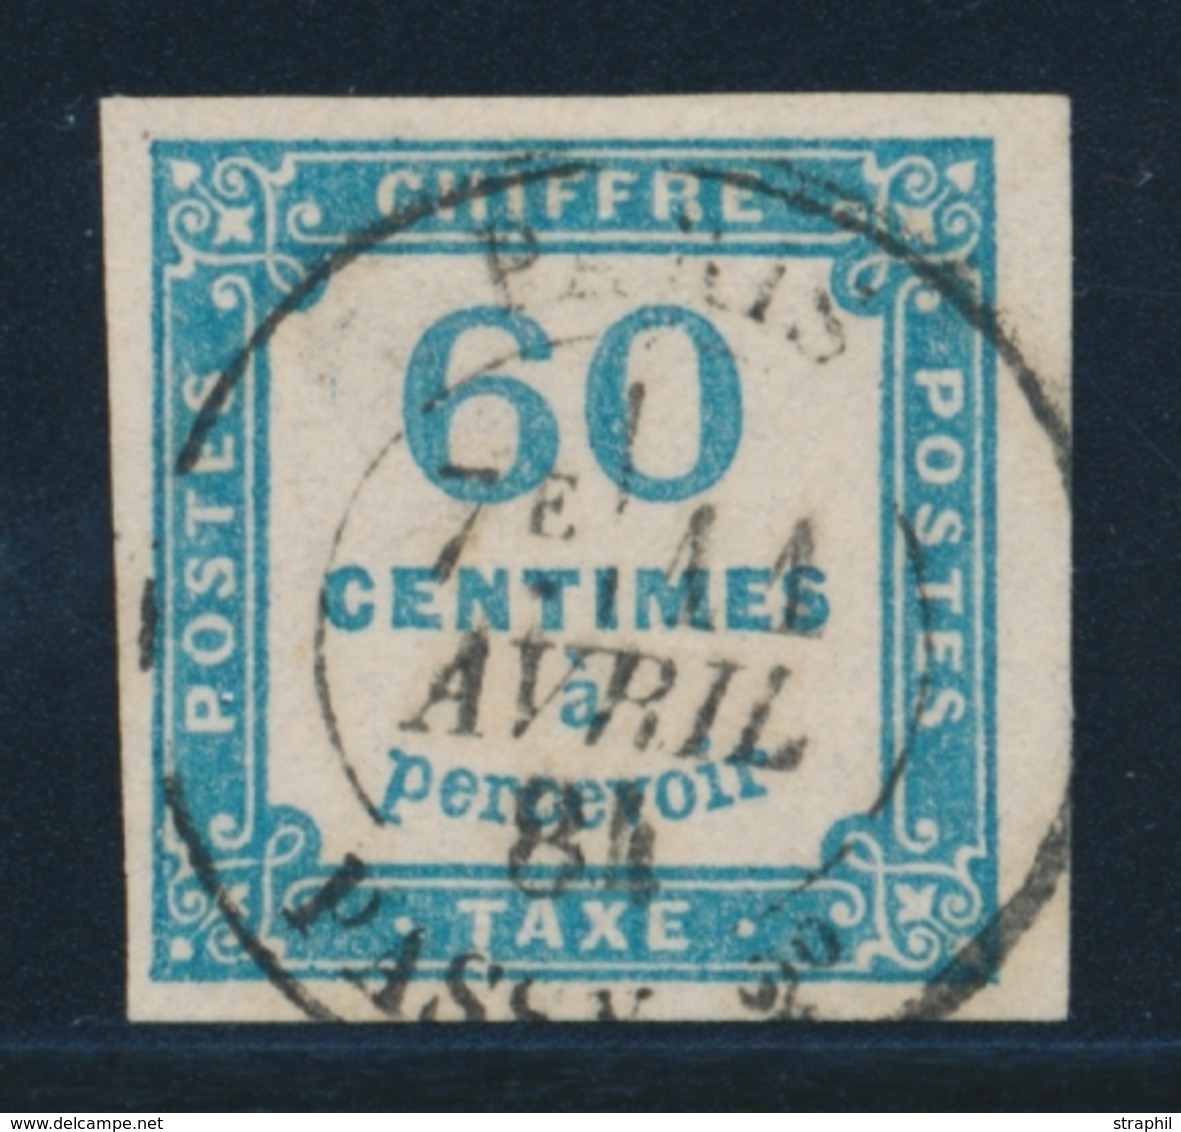 O N°9 - 60c Bleu - Belle Oblit. - TB - 1859-1959 Neufs